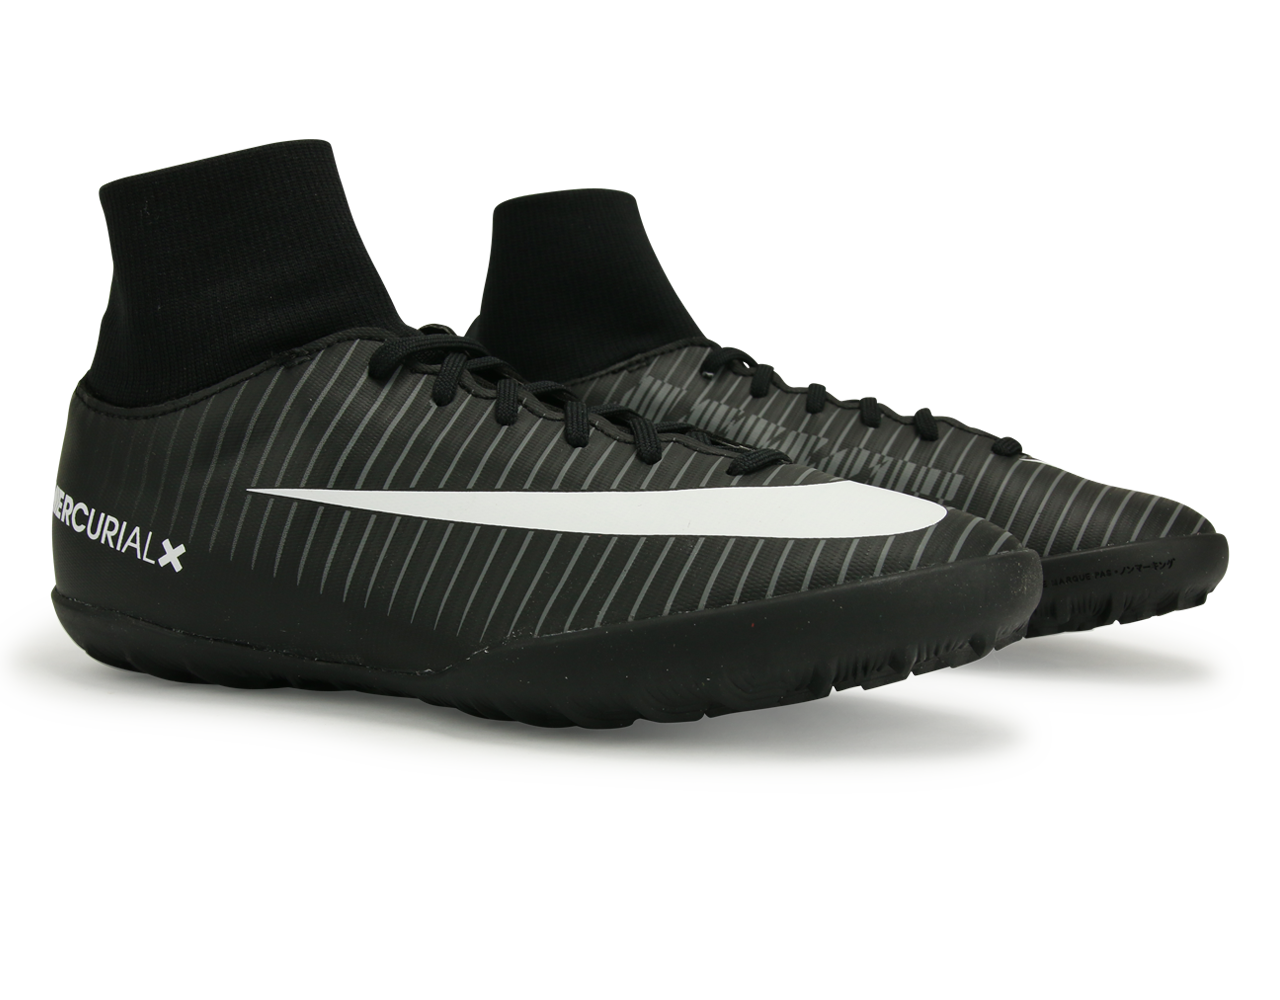 Nike Kids MercurialX Victory VI Dynamic Fit Turf Soccer Shoes Black/White/Dark Grey